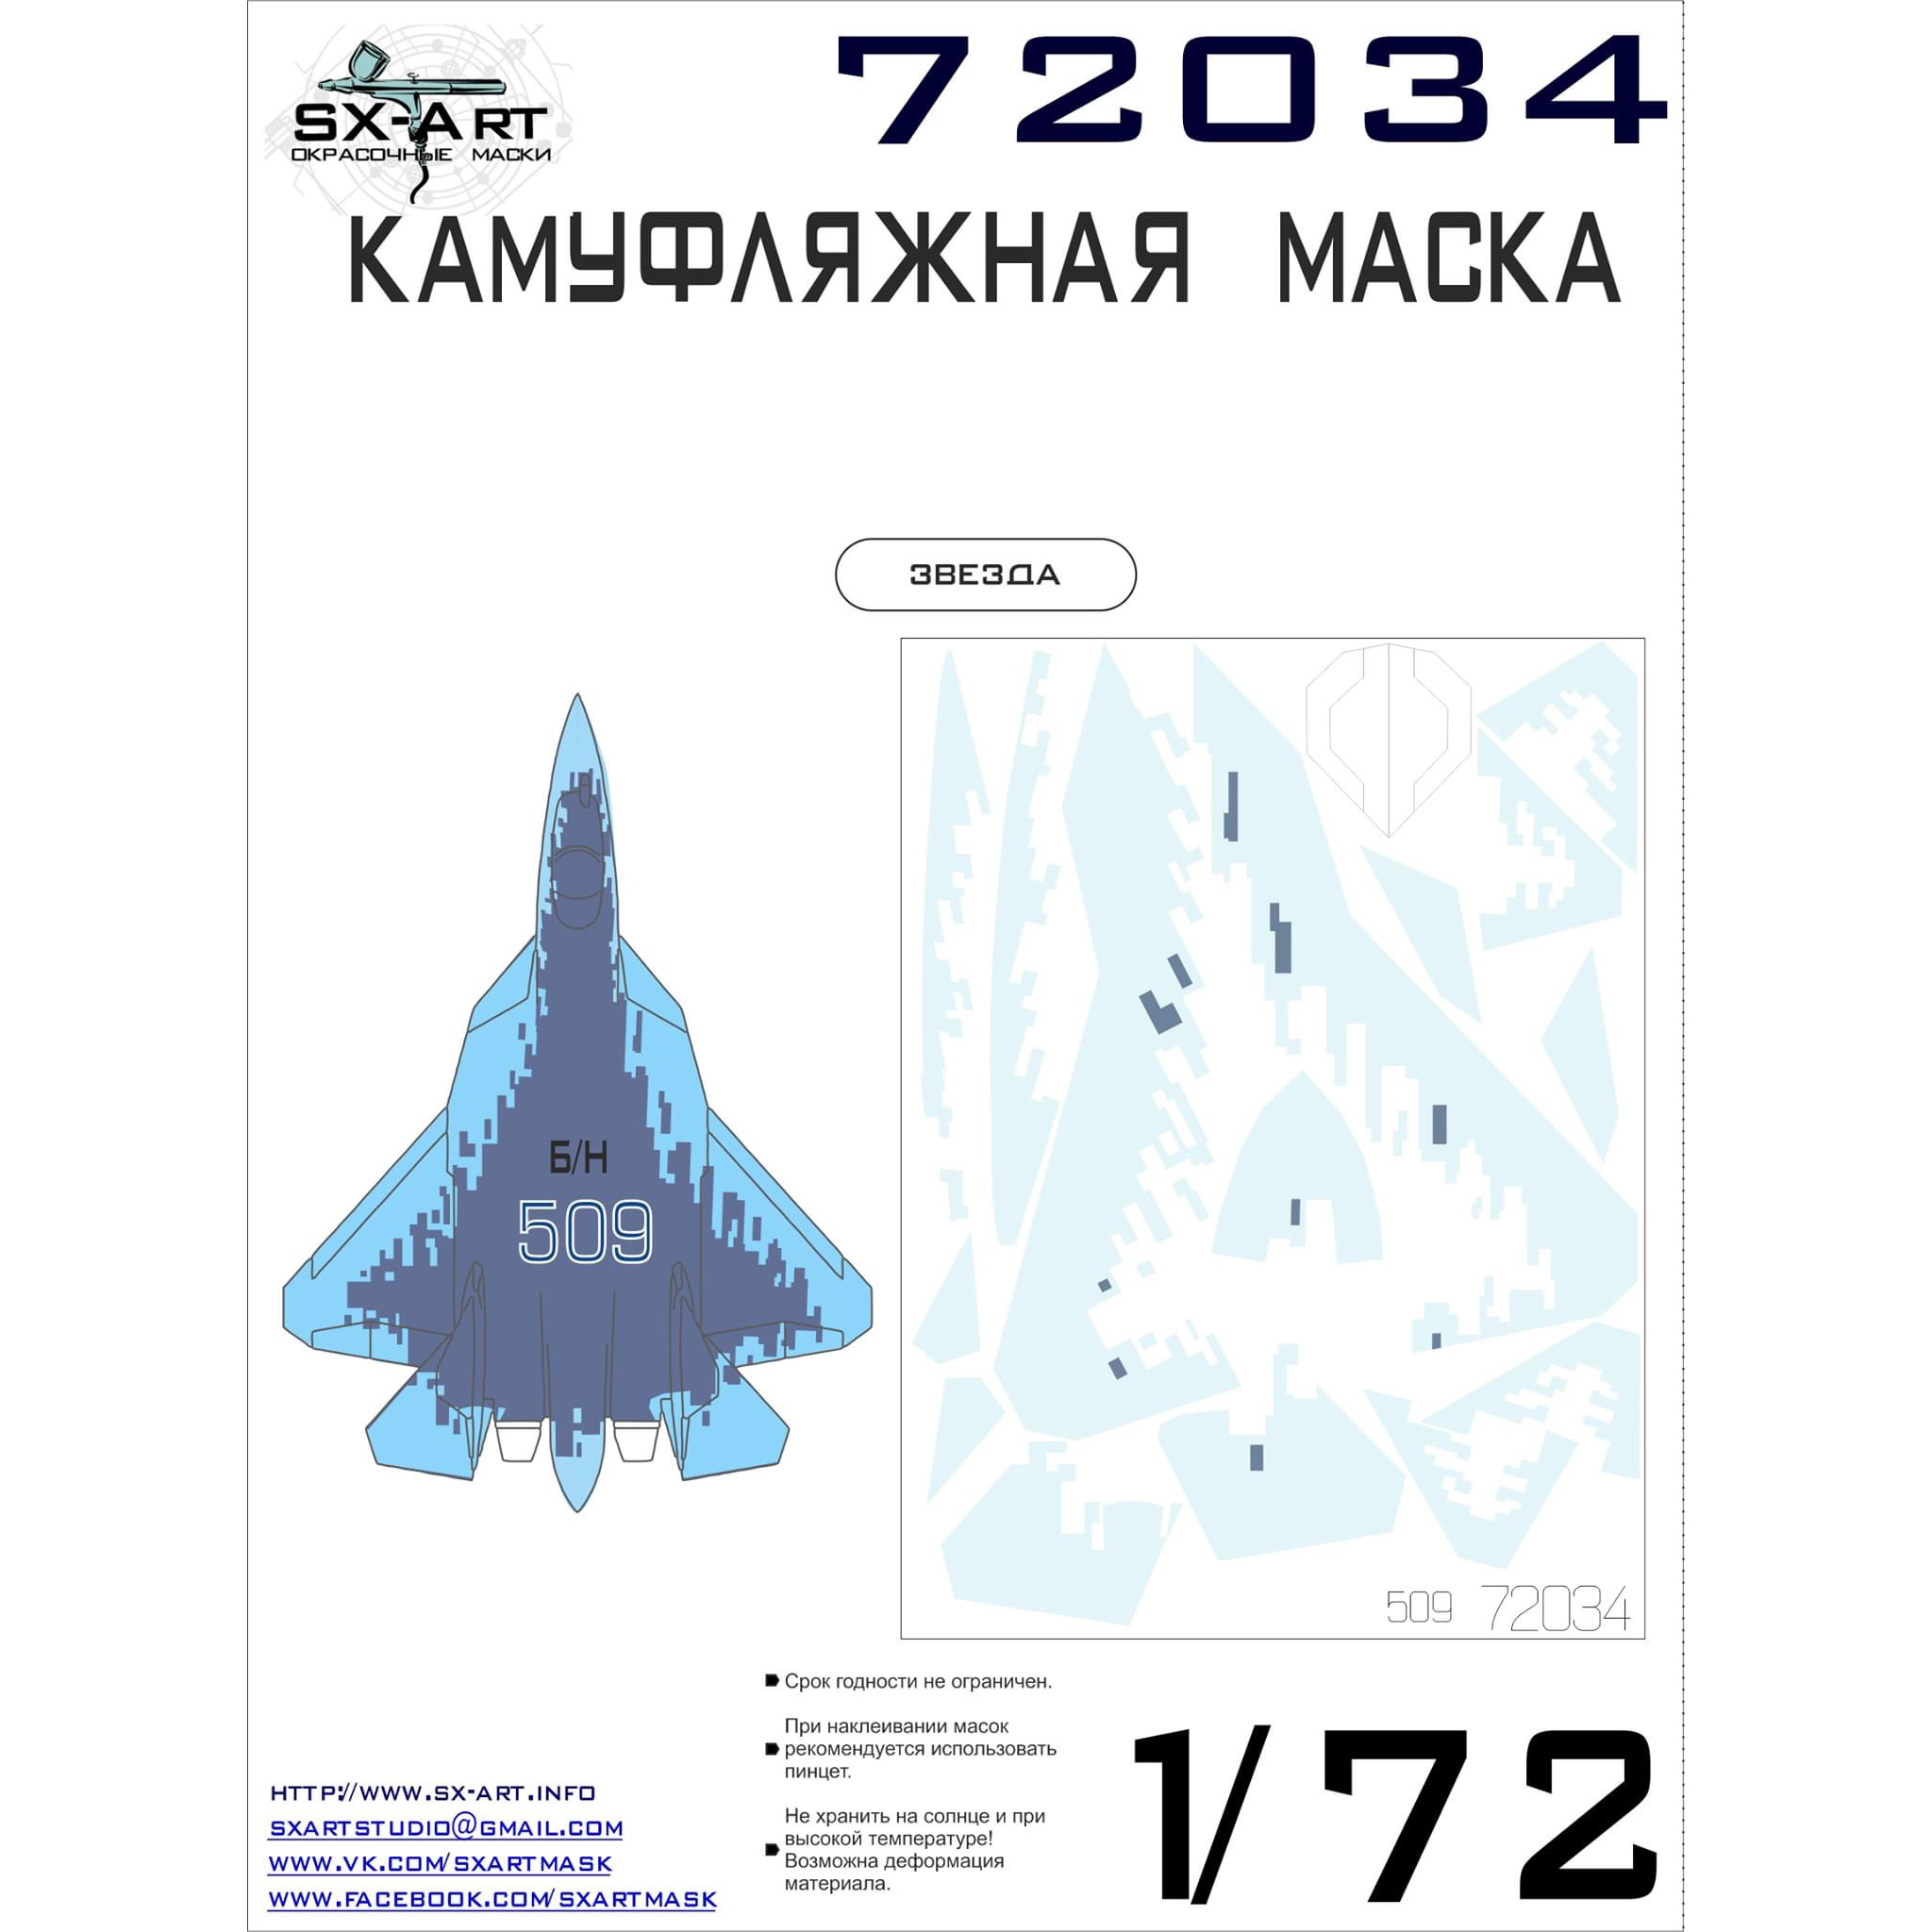 72034 SX-Art 1/72 camouflage mask su-57 Board 509 (Zvezda)